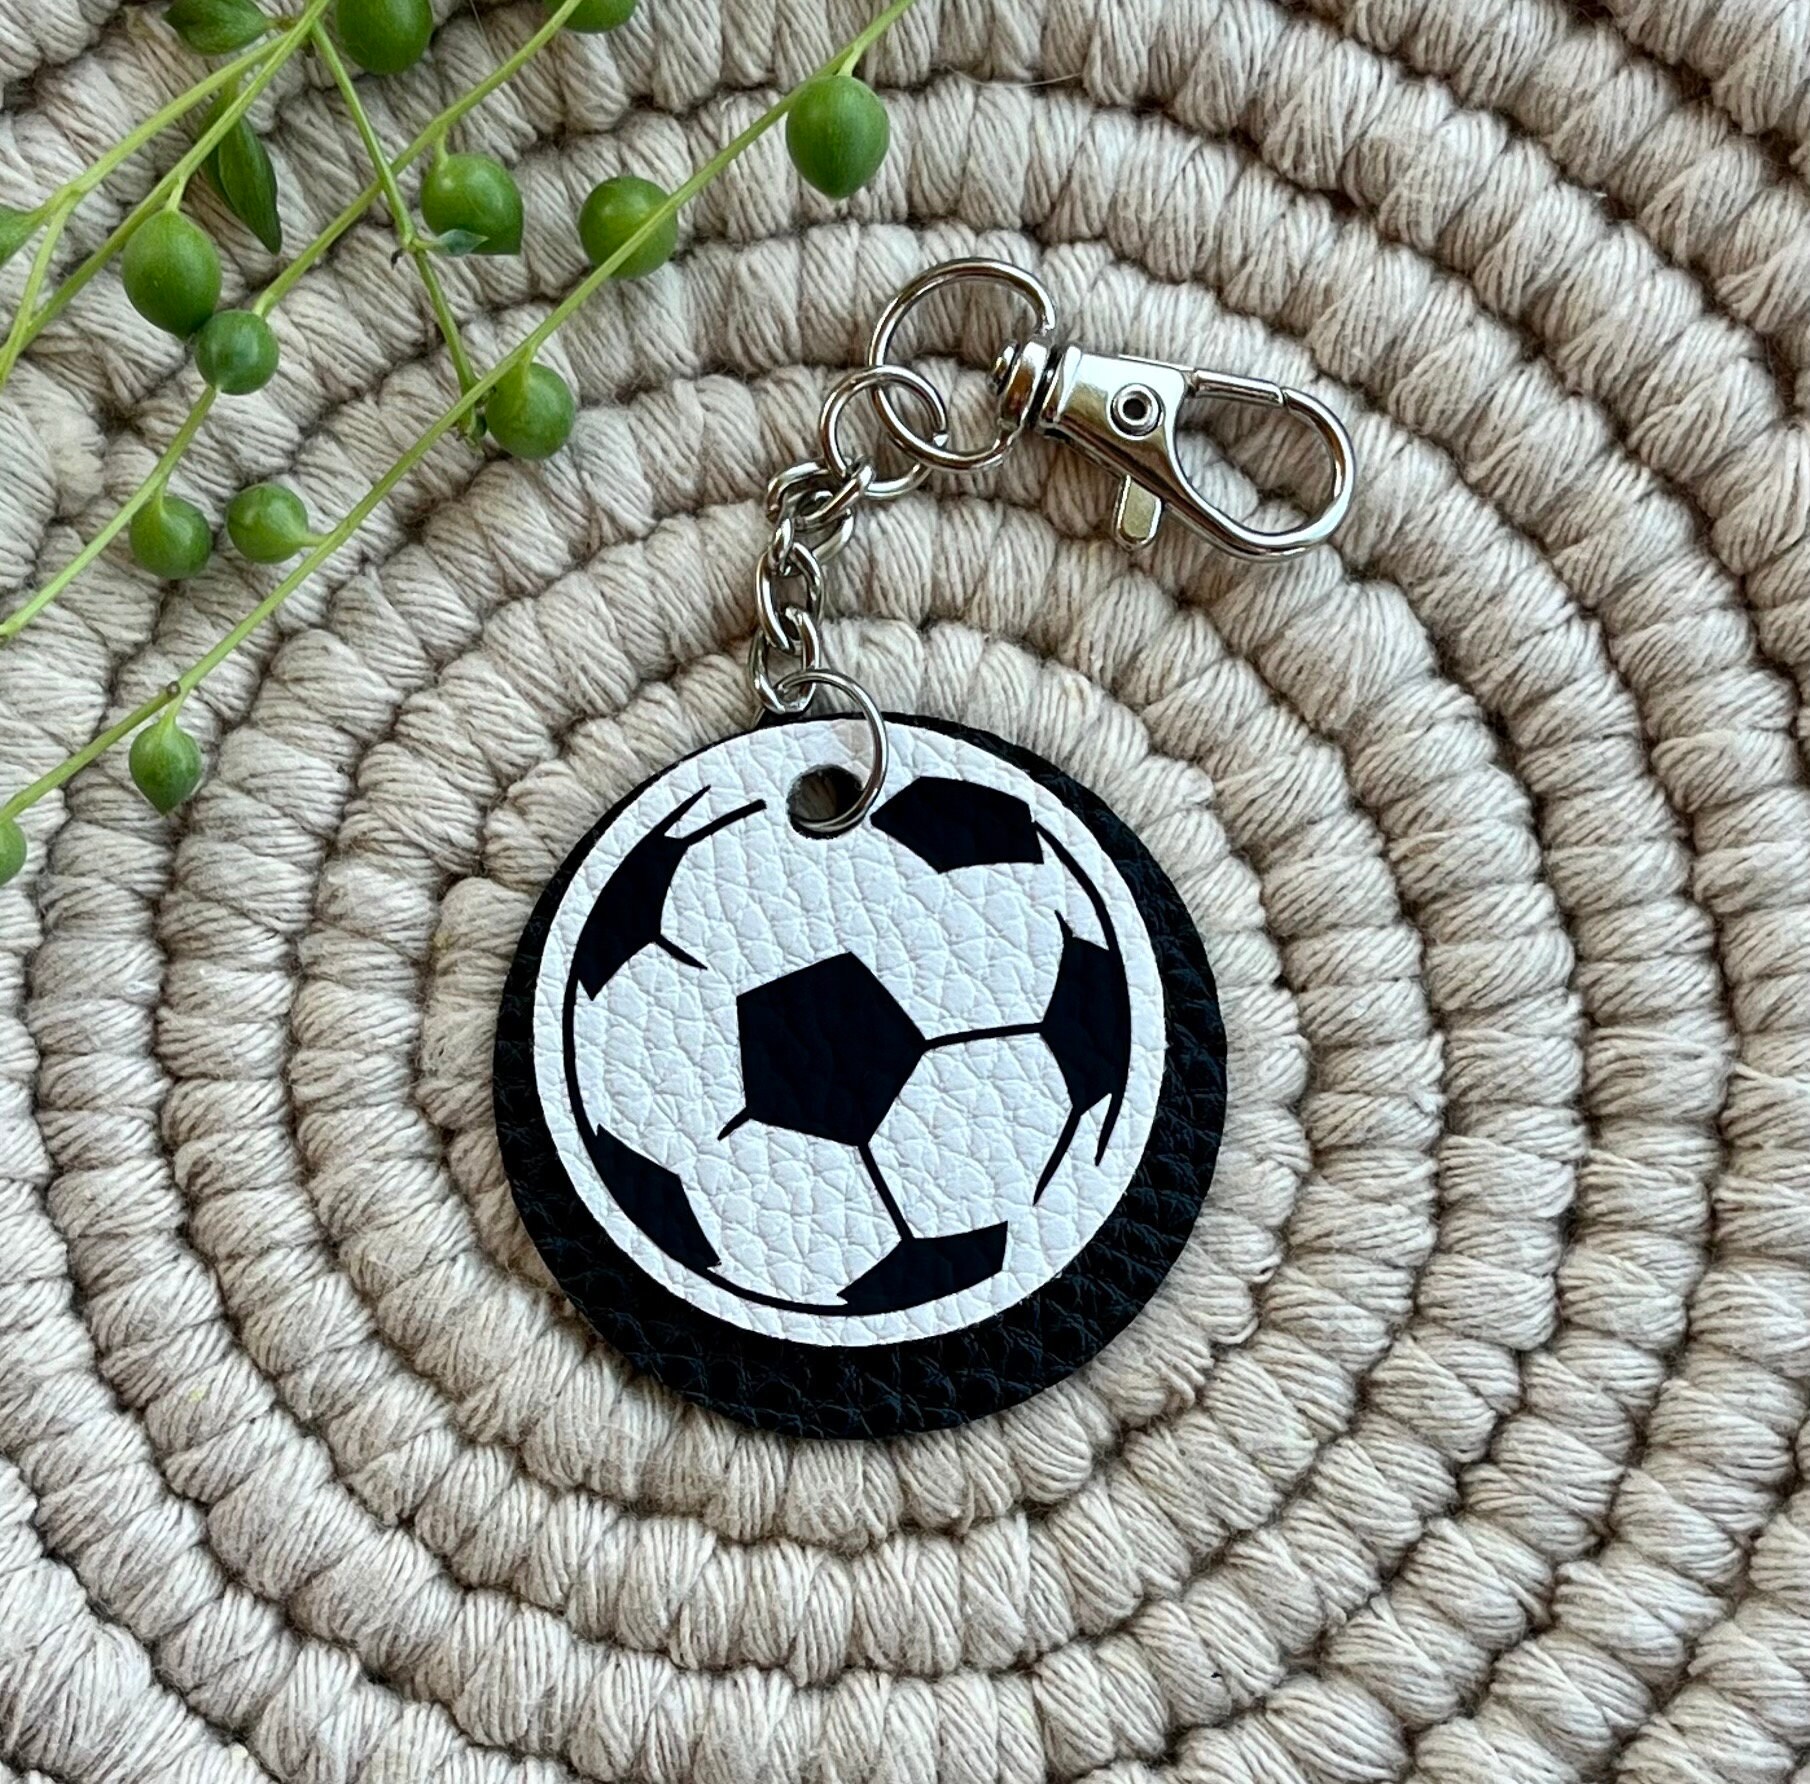 Rubber Soccer Ball Keychain